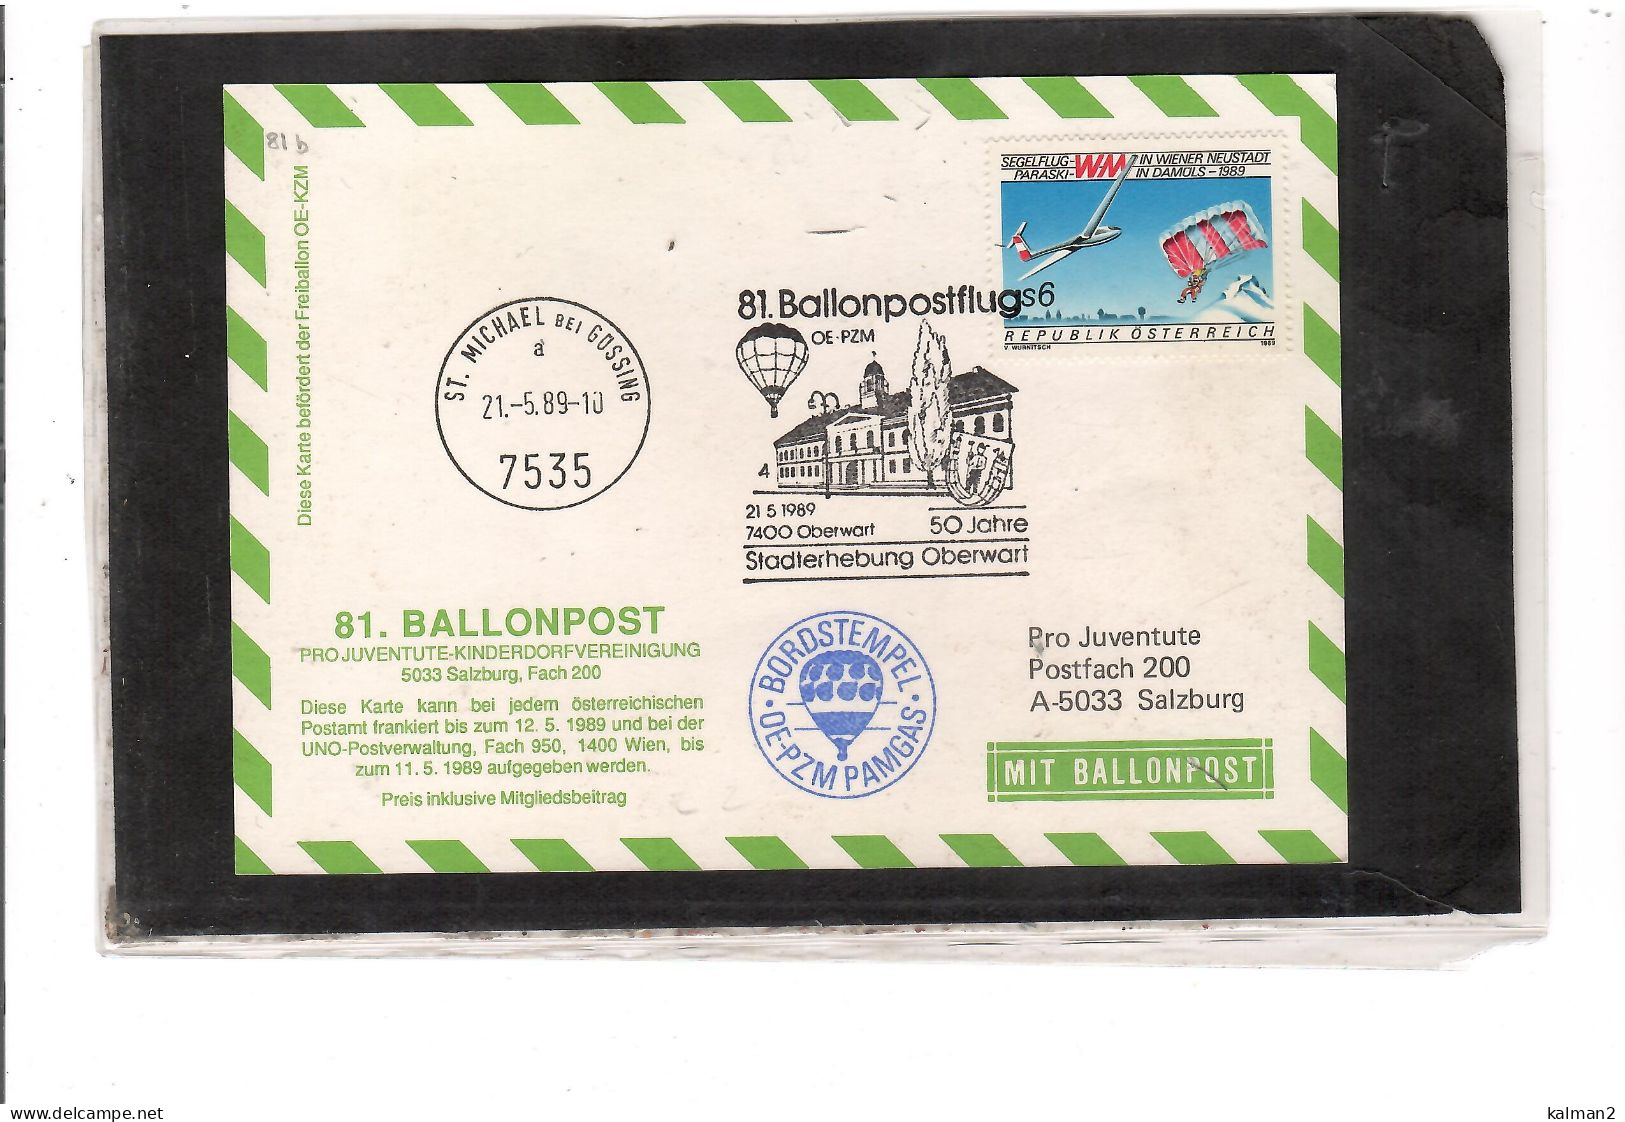 TEM20432 - OBERWART 21.5.1989  /  81. BALLONPOSTFLUG -  NETTO KATALOG NR. 81b   - BALLON "  OE-PZM PAMGAS  " - Luchtballons